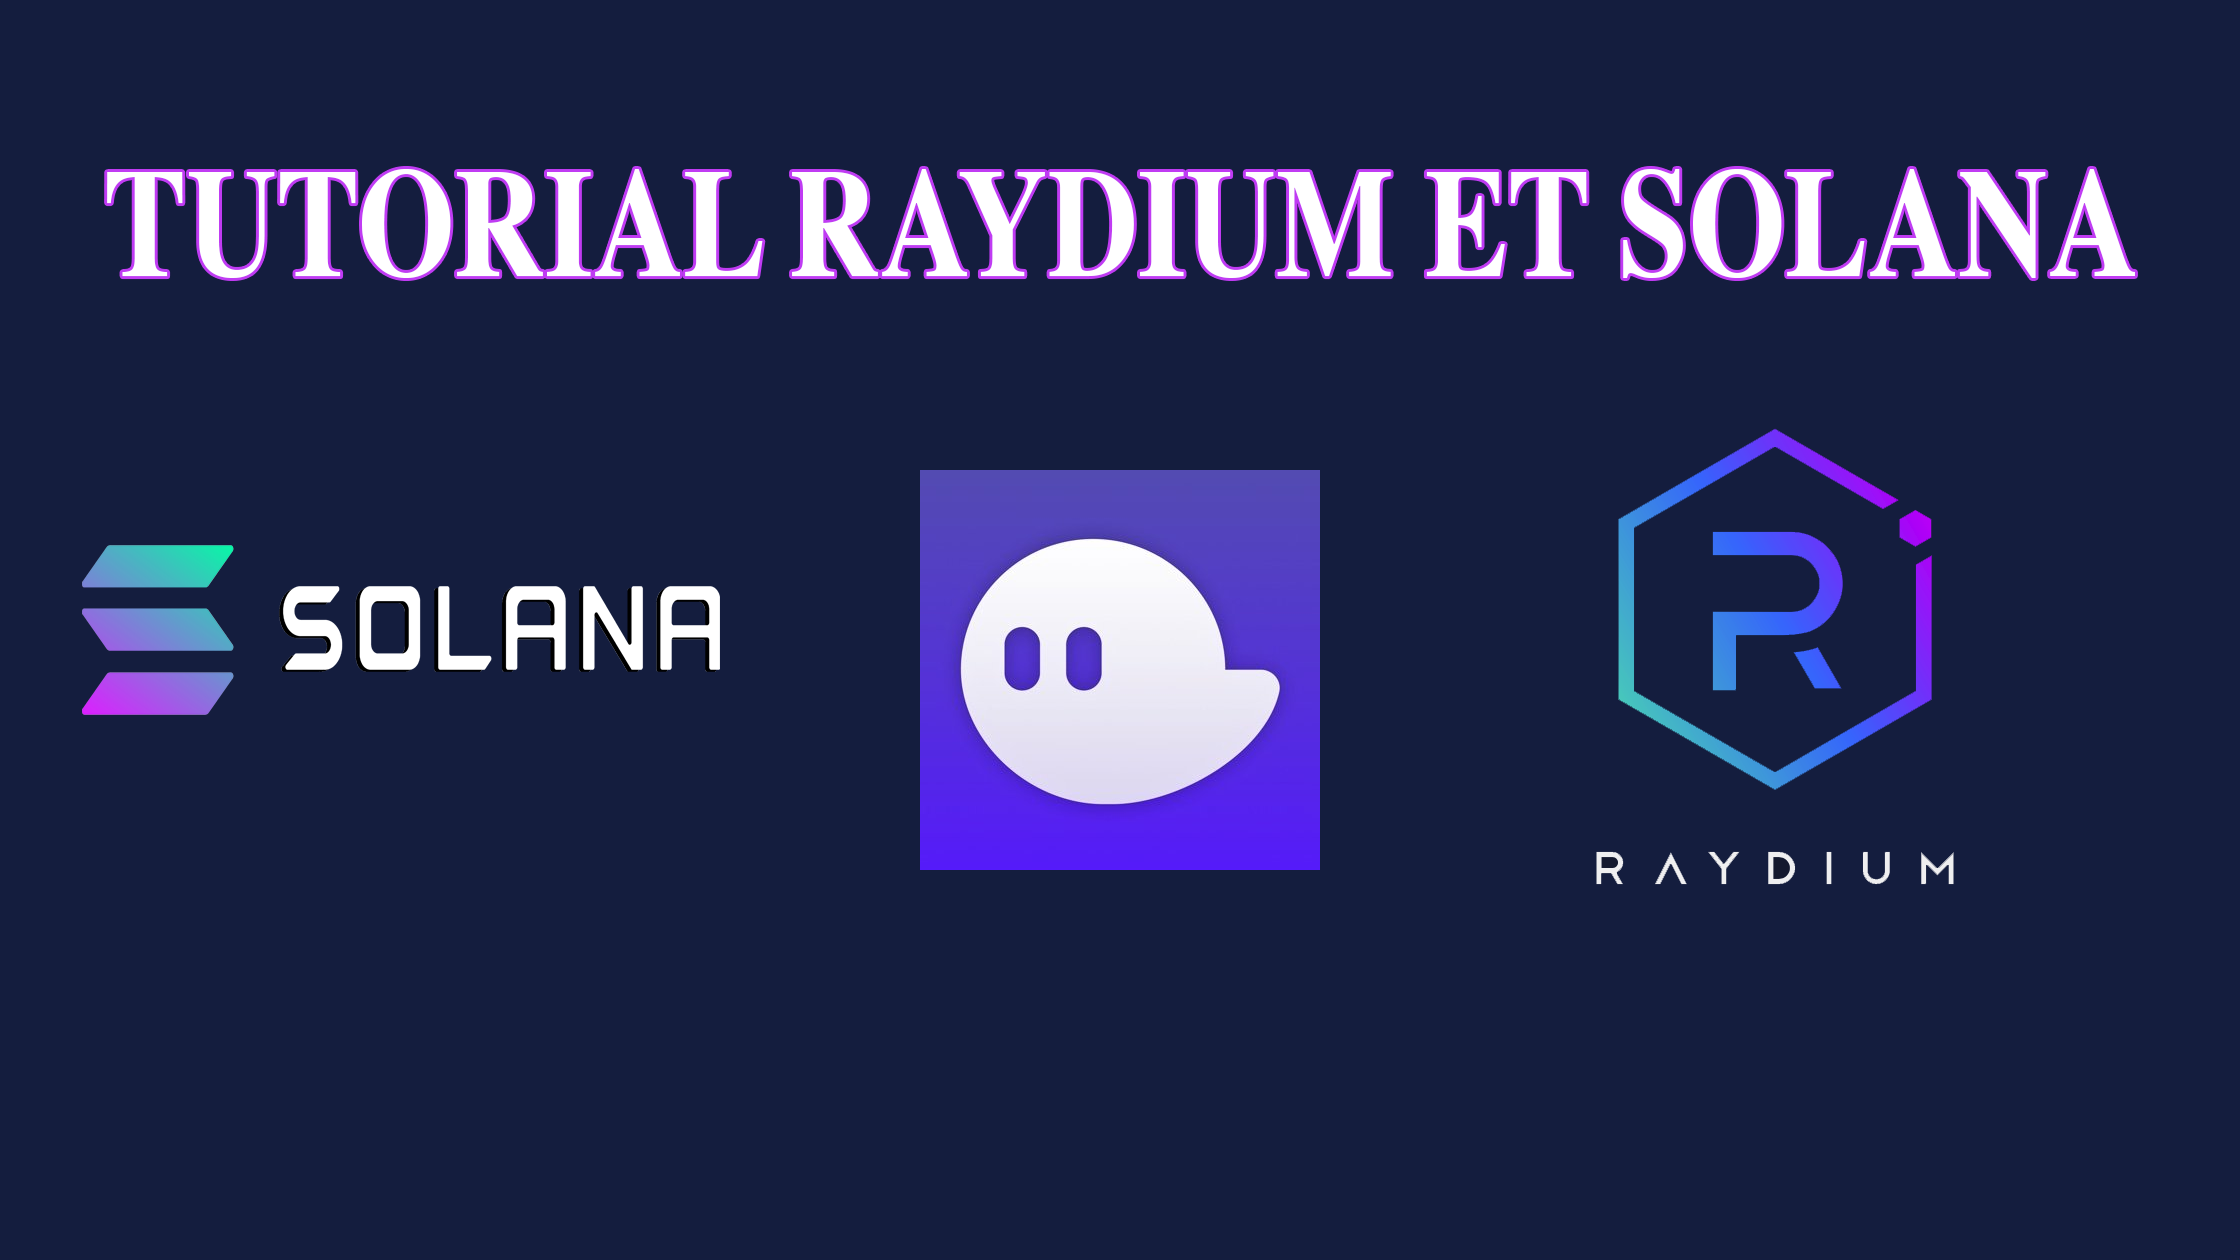 Tutoriel Raydium avec Phantom Wallet sur le blockchain ...